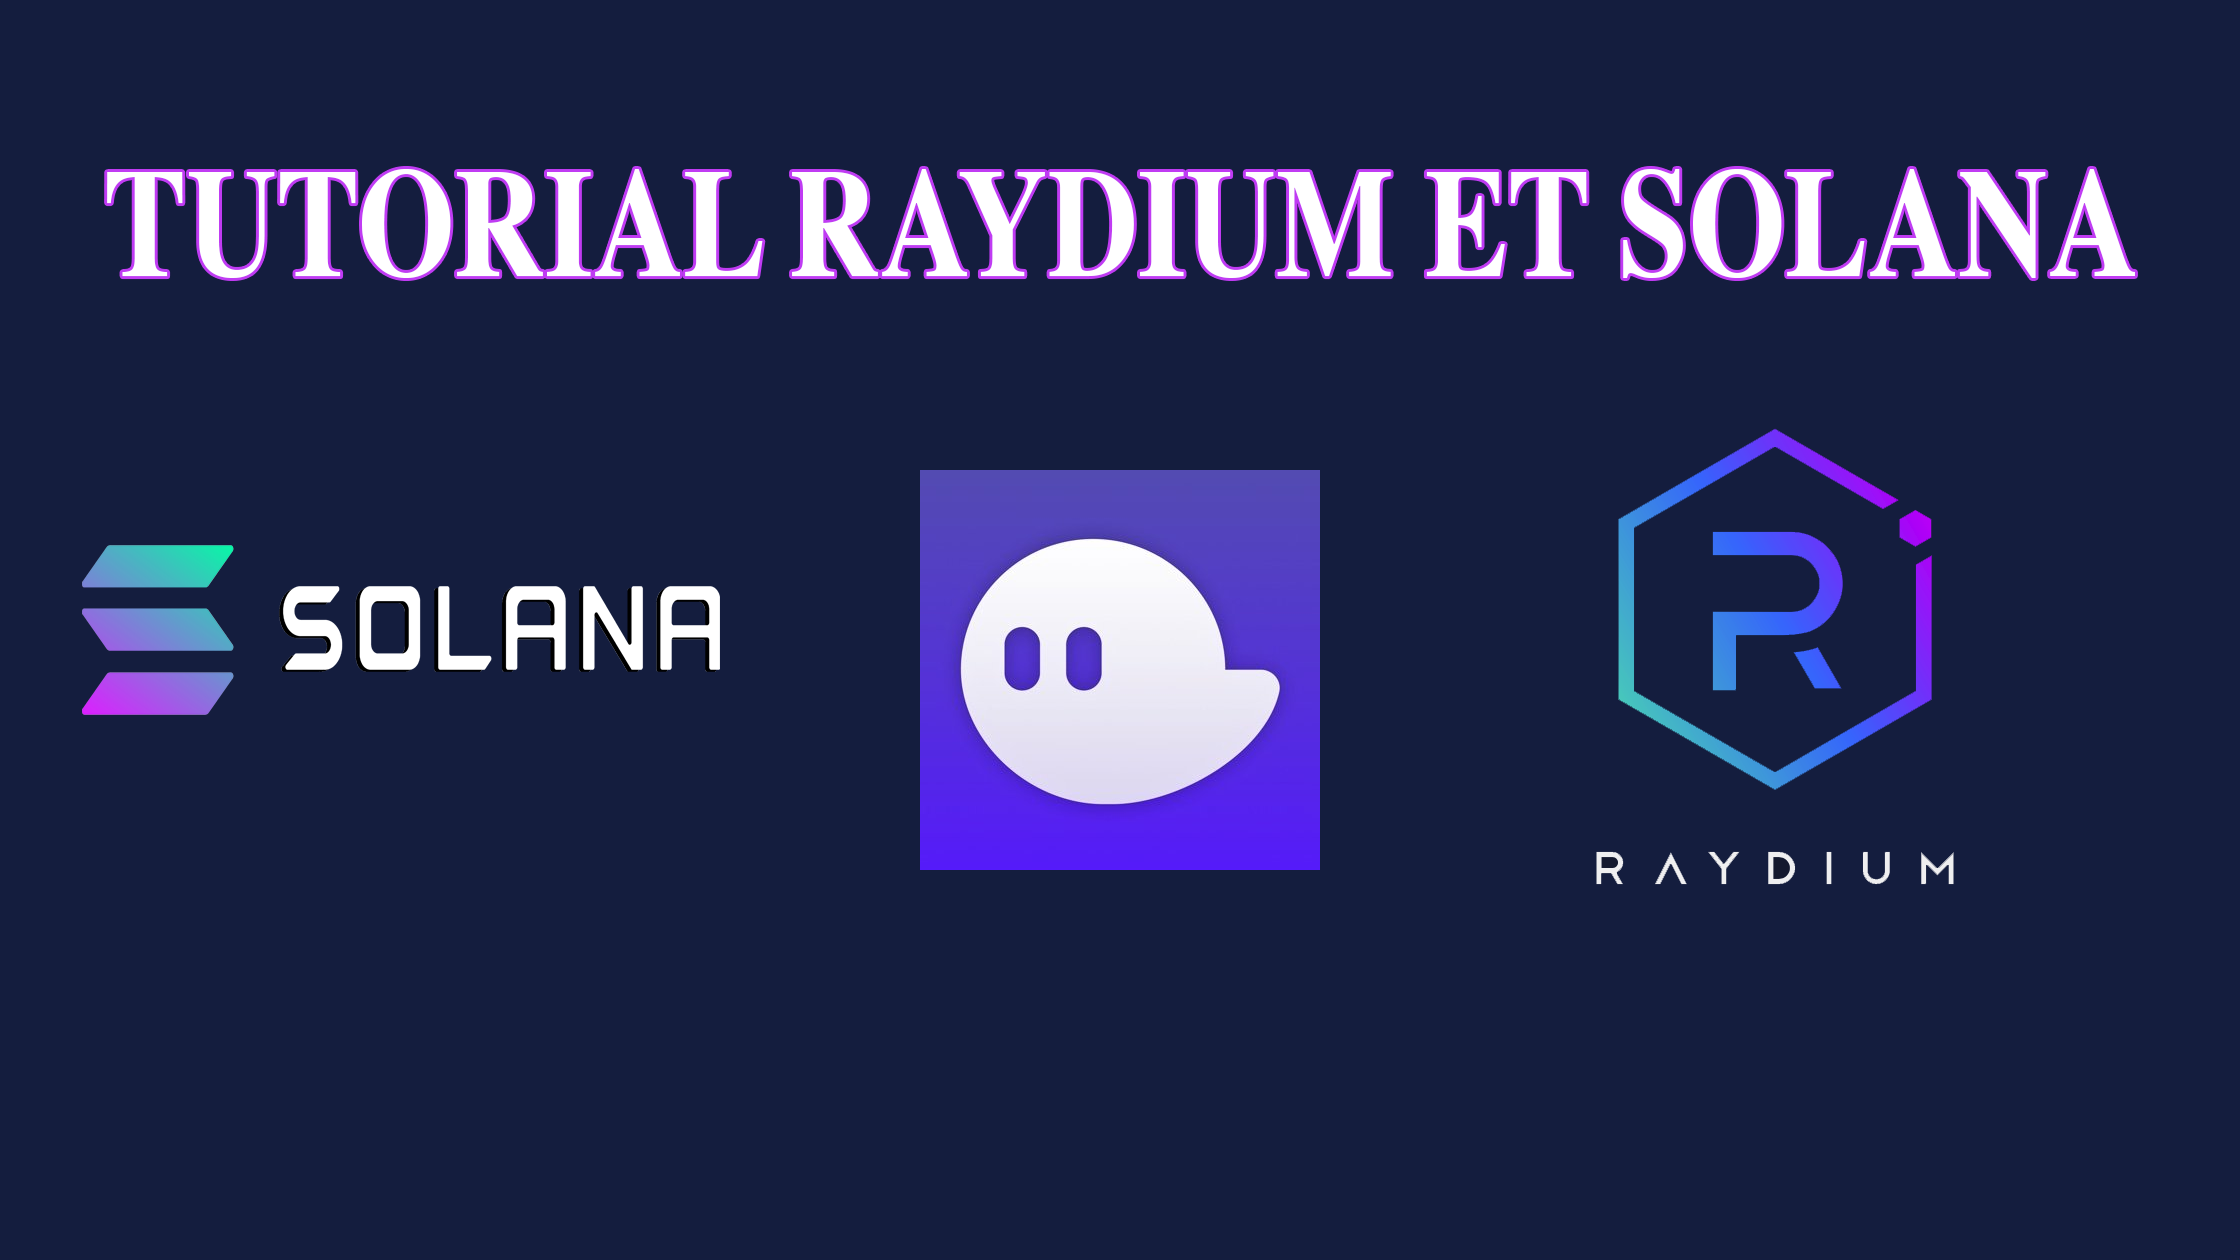 Tutoriel Raydium avec Phantom Wallet sur le blockchain ...